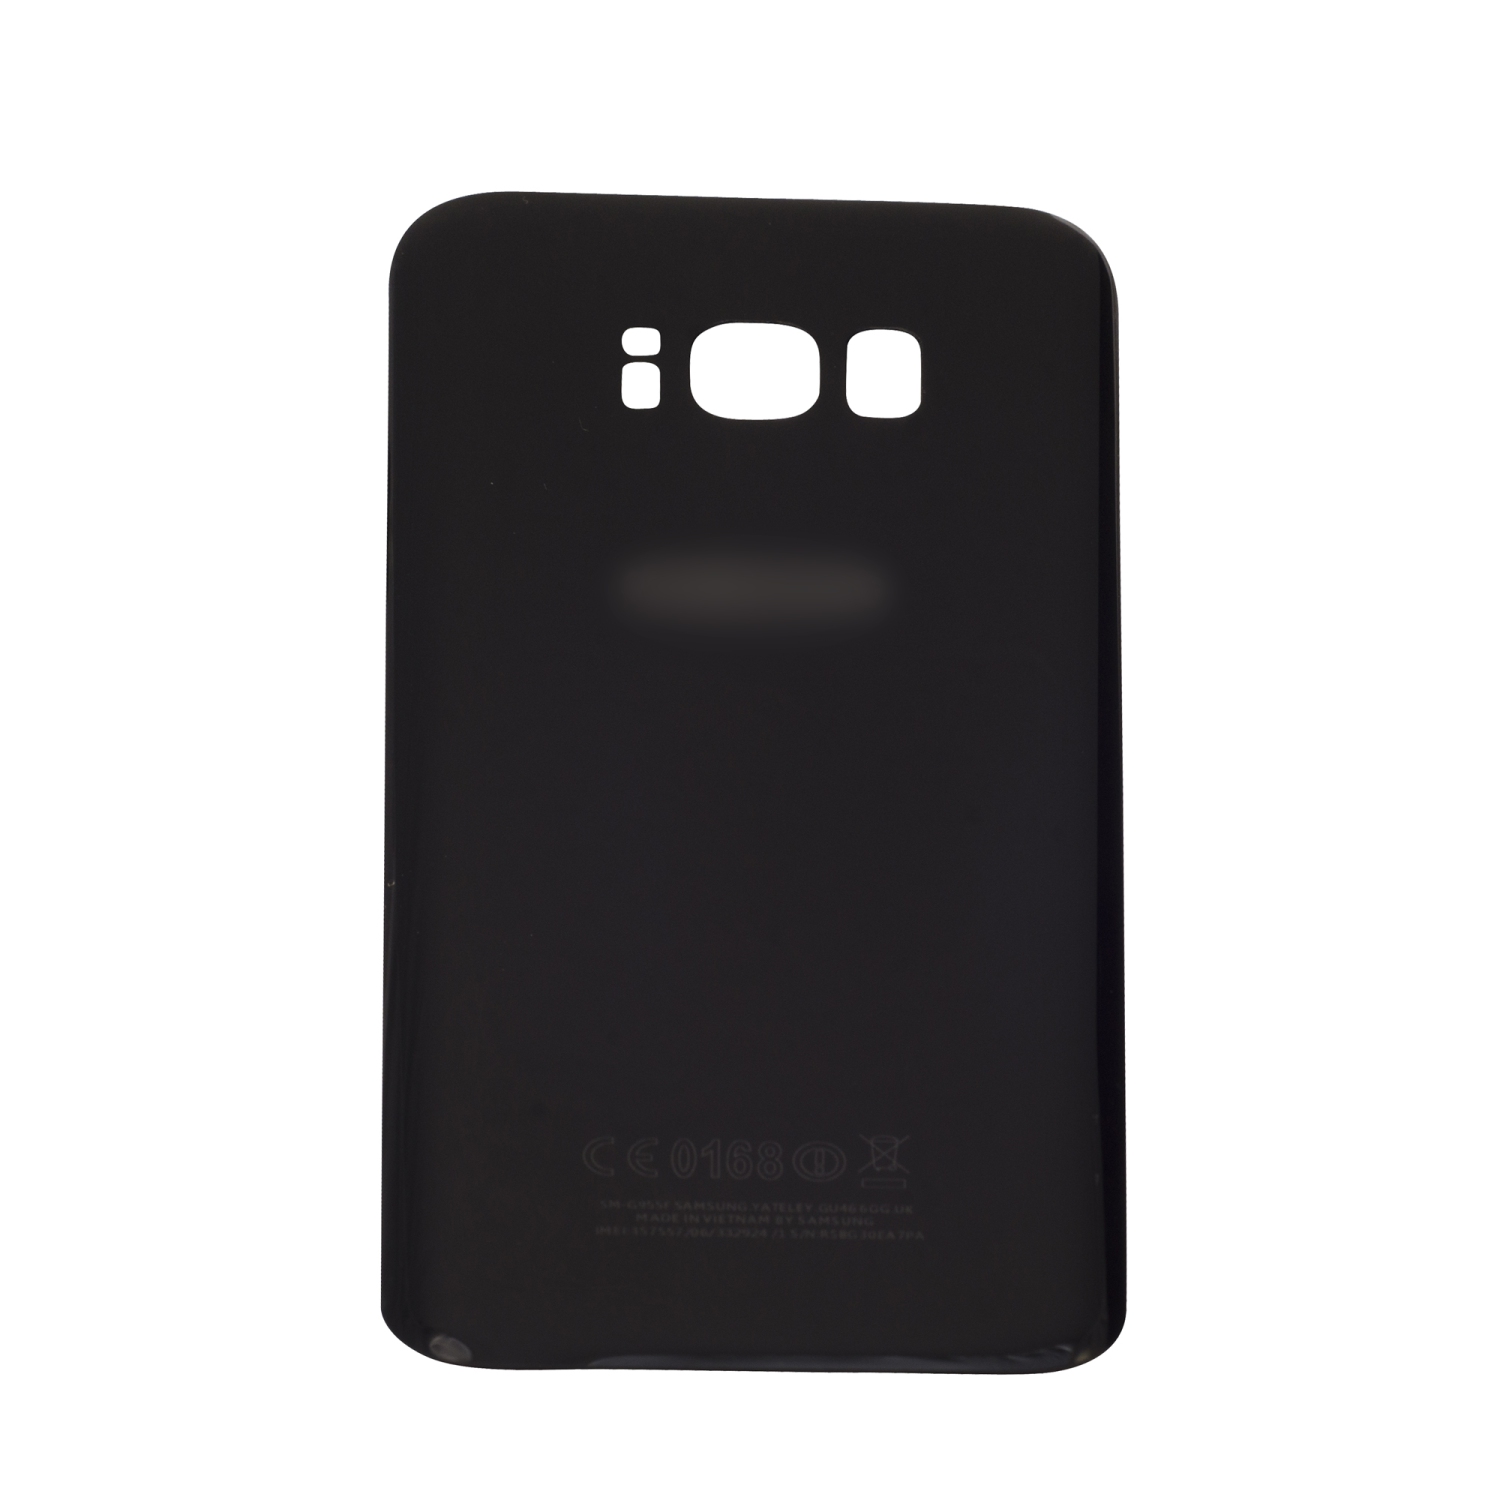 Samsung Galaxy S8 Plus Back Battery Housing Cover Door - Black